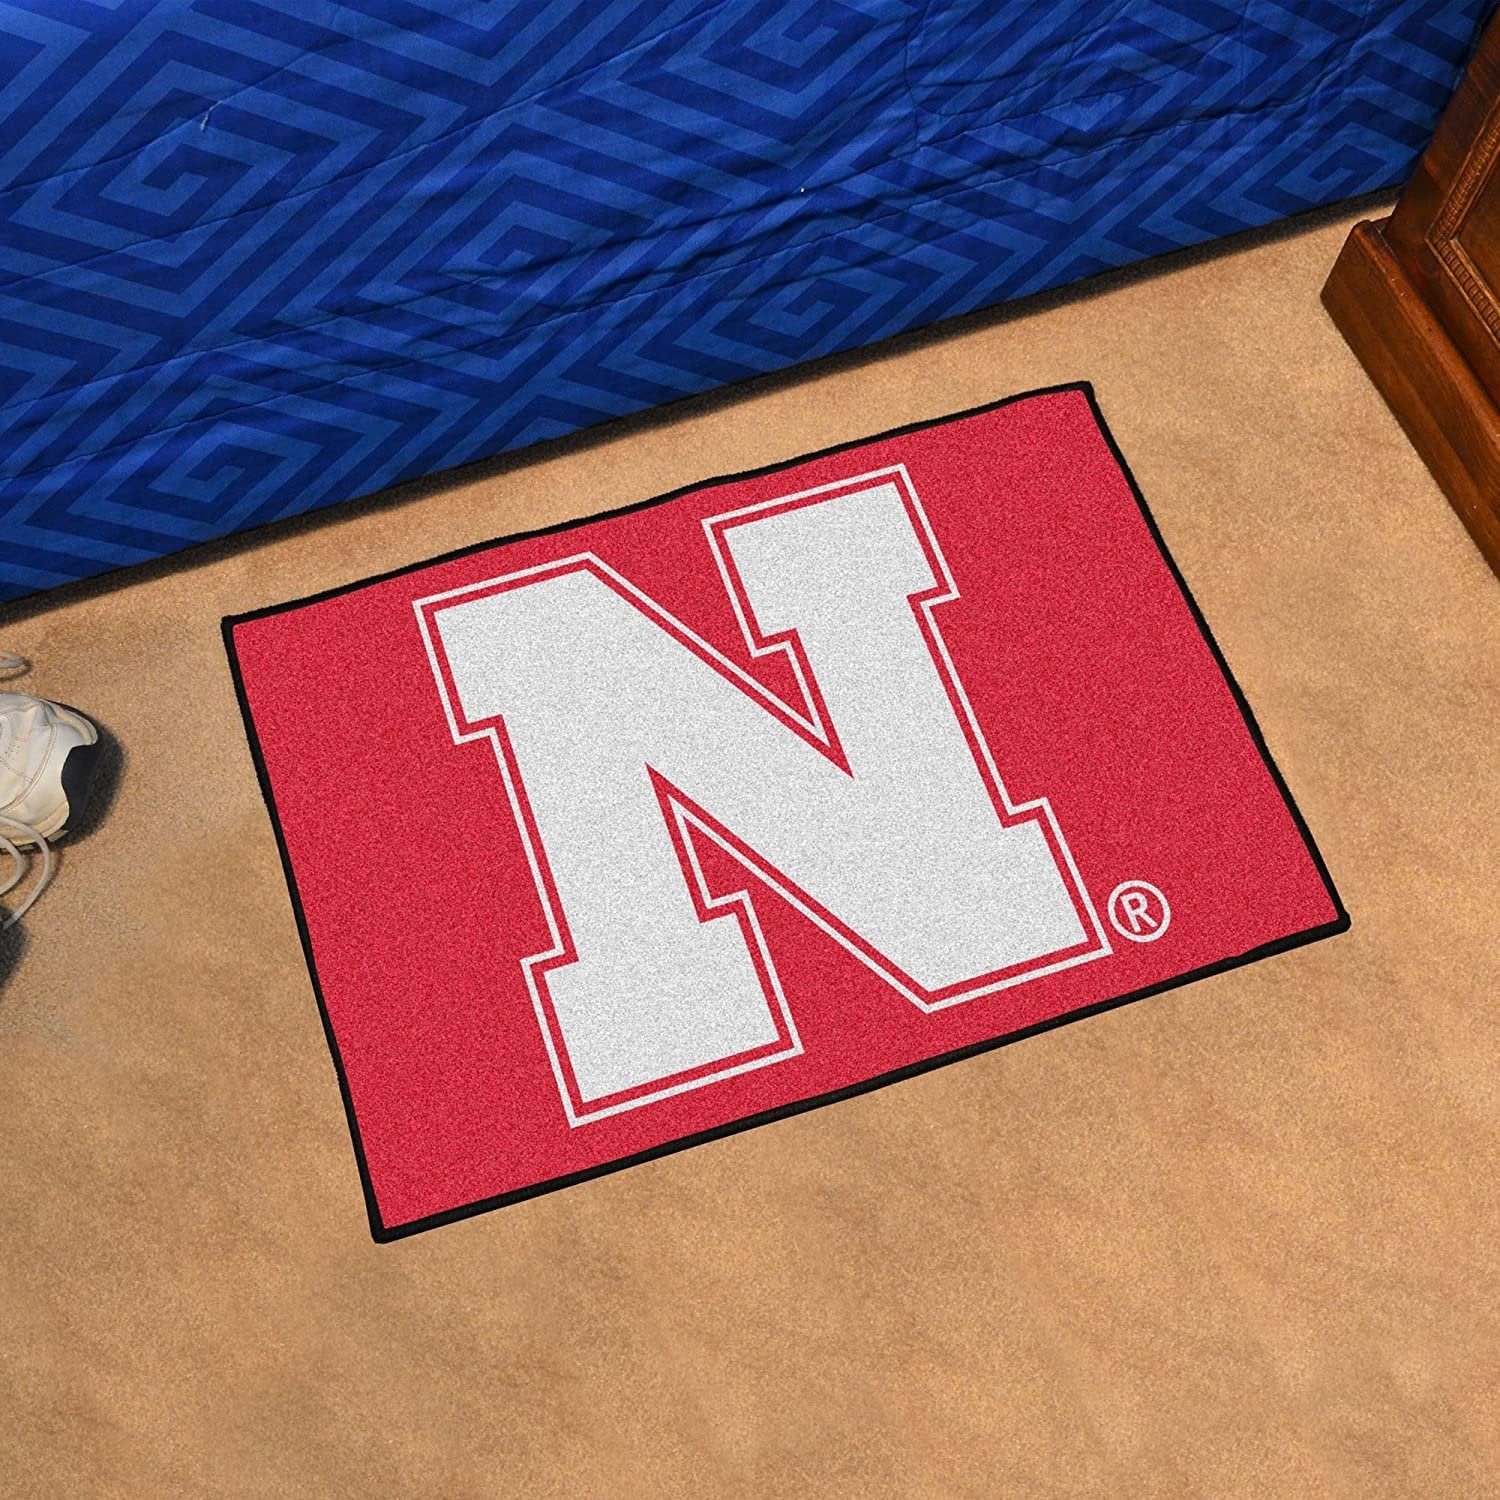 University of Nebraska Cornhuskers Floor Mat Area Rug, 20x30 Inch, Nylon, Anti-Skid Backing